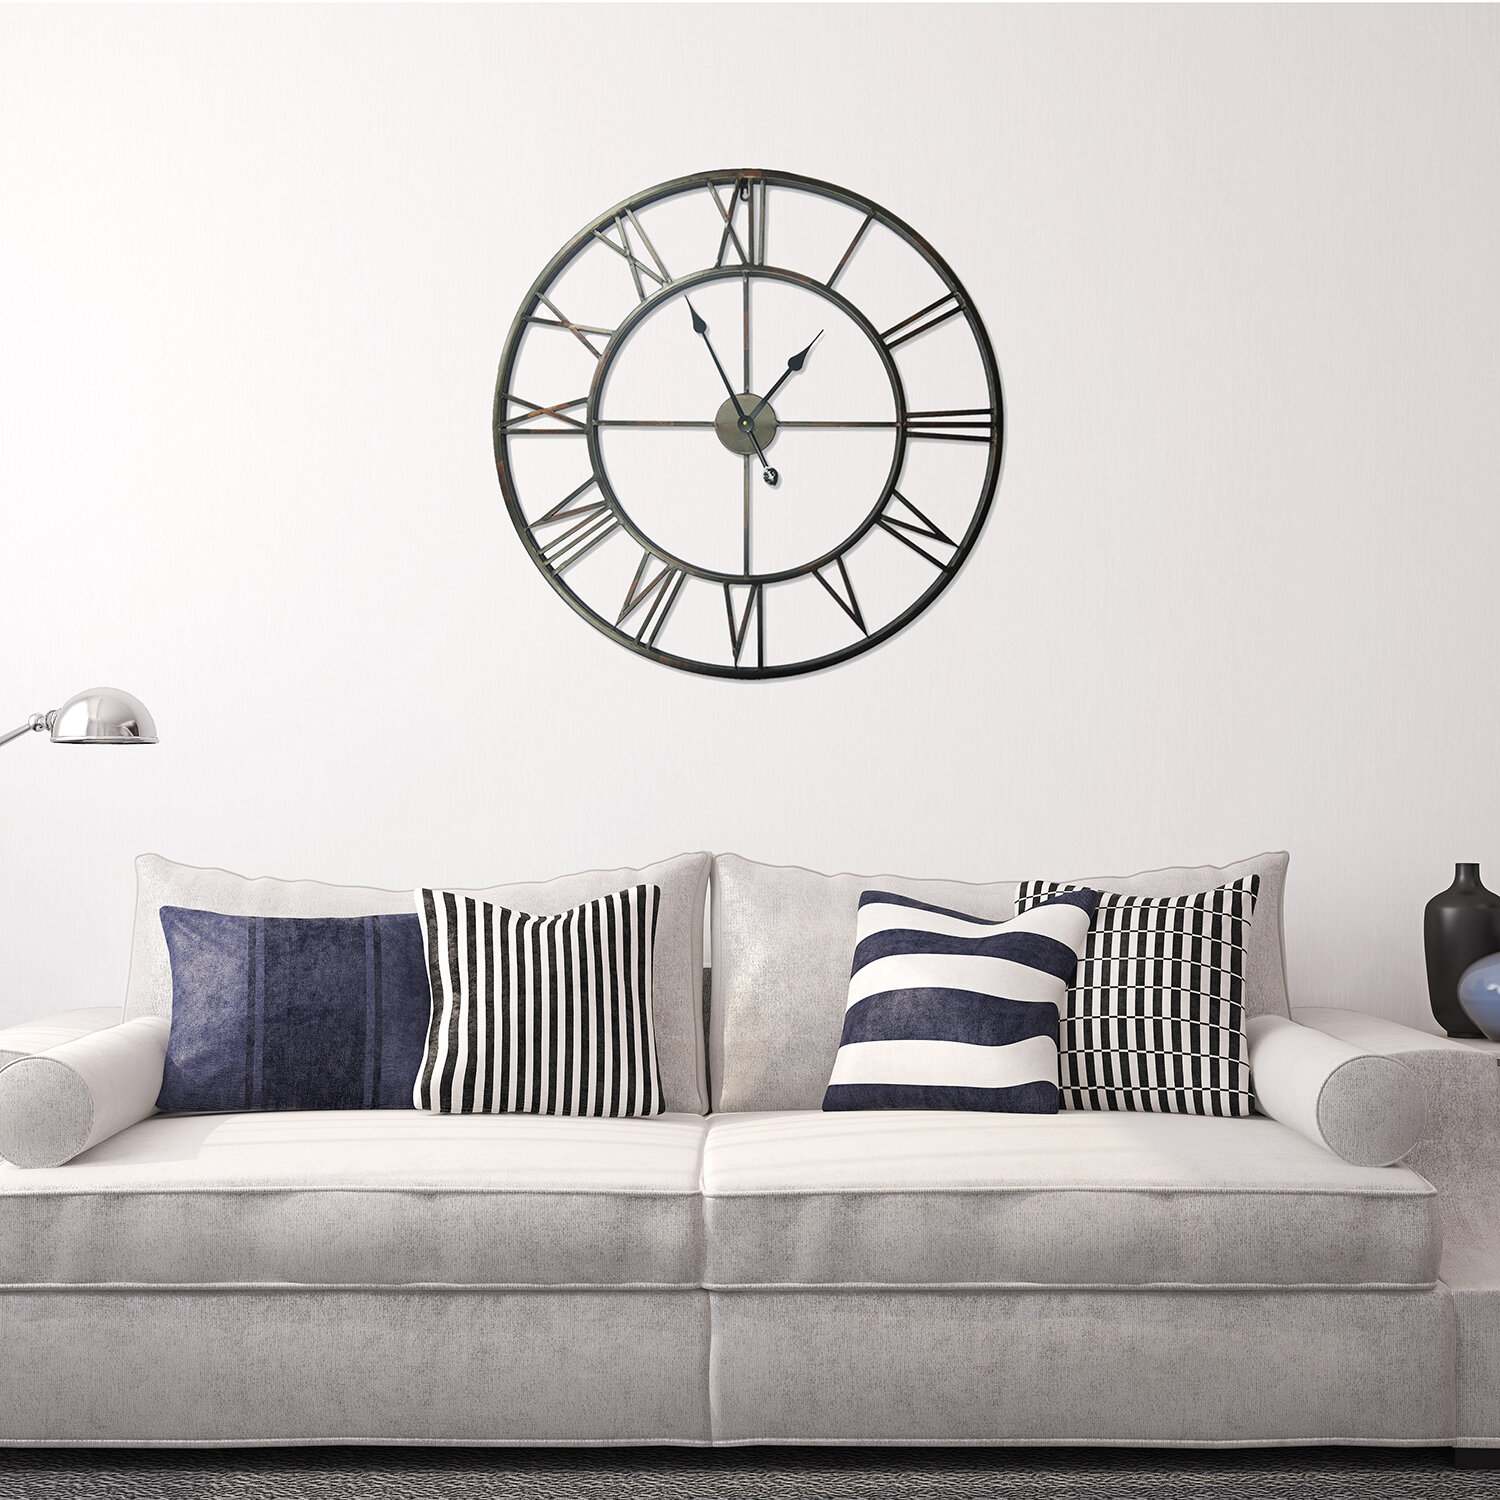 Alba Small Round Wall Clock In Black Acrylic 